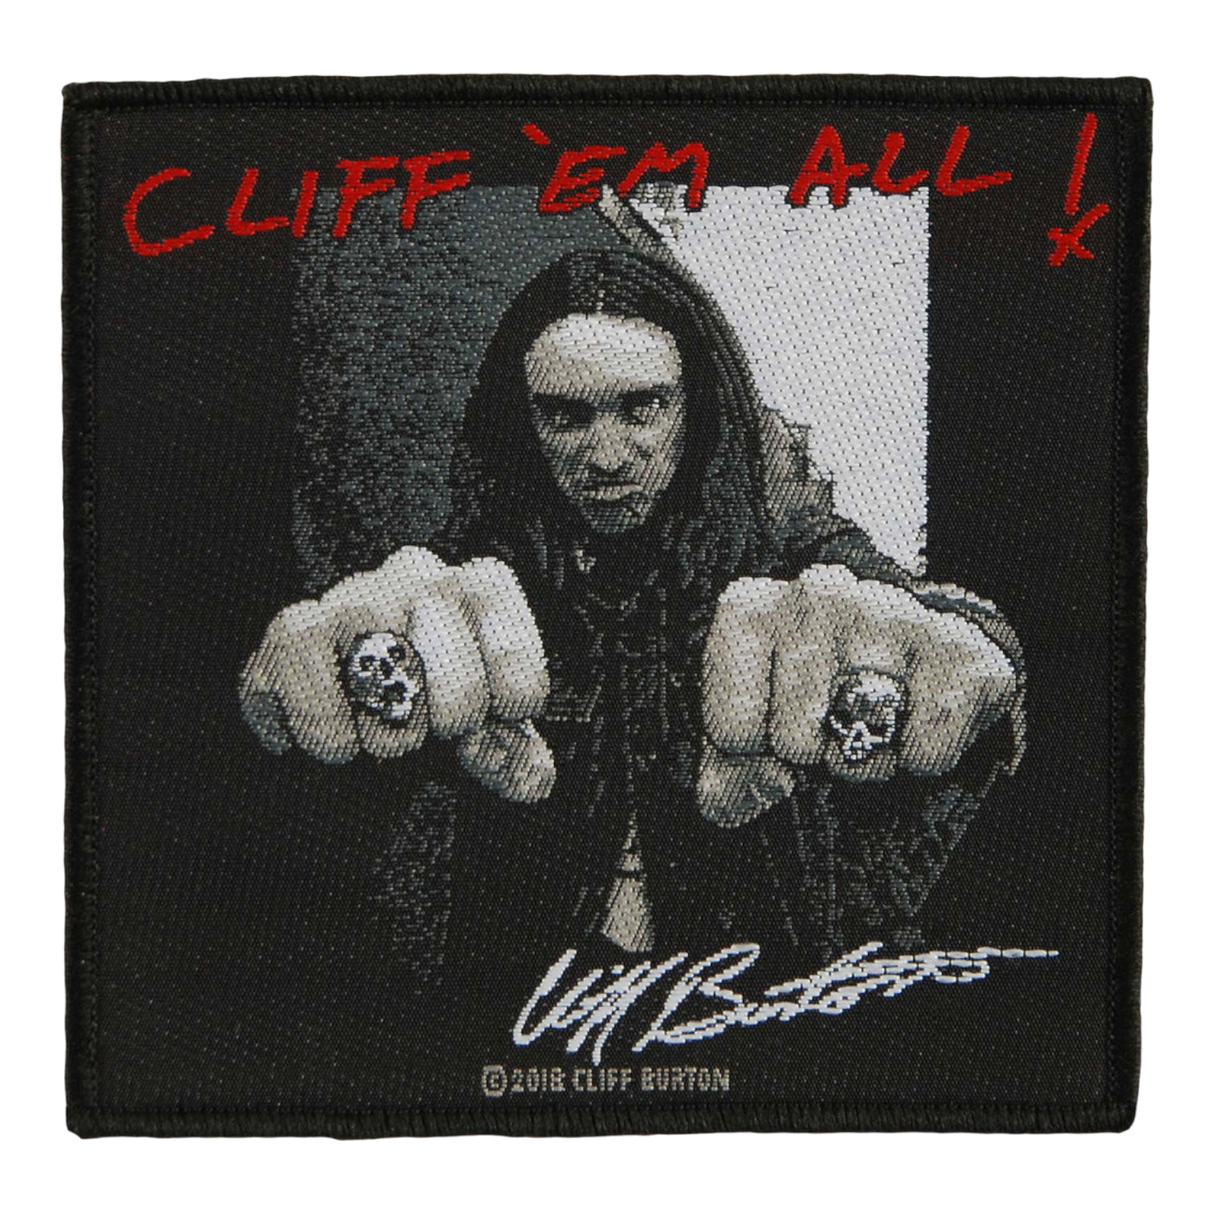 Patch Metallica - Cliff 'Em All